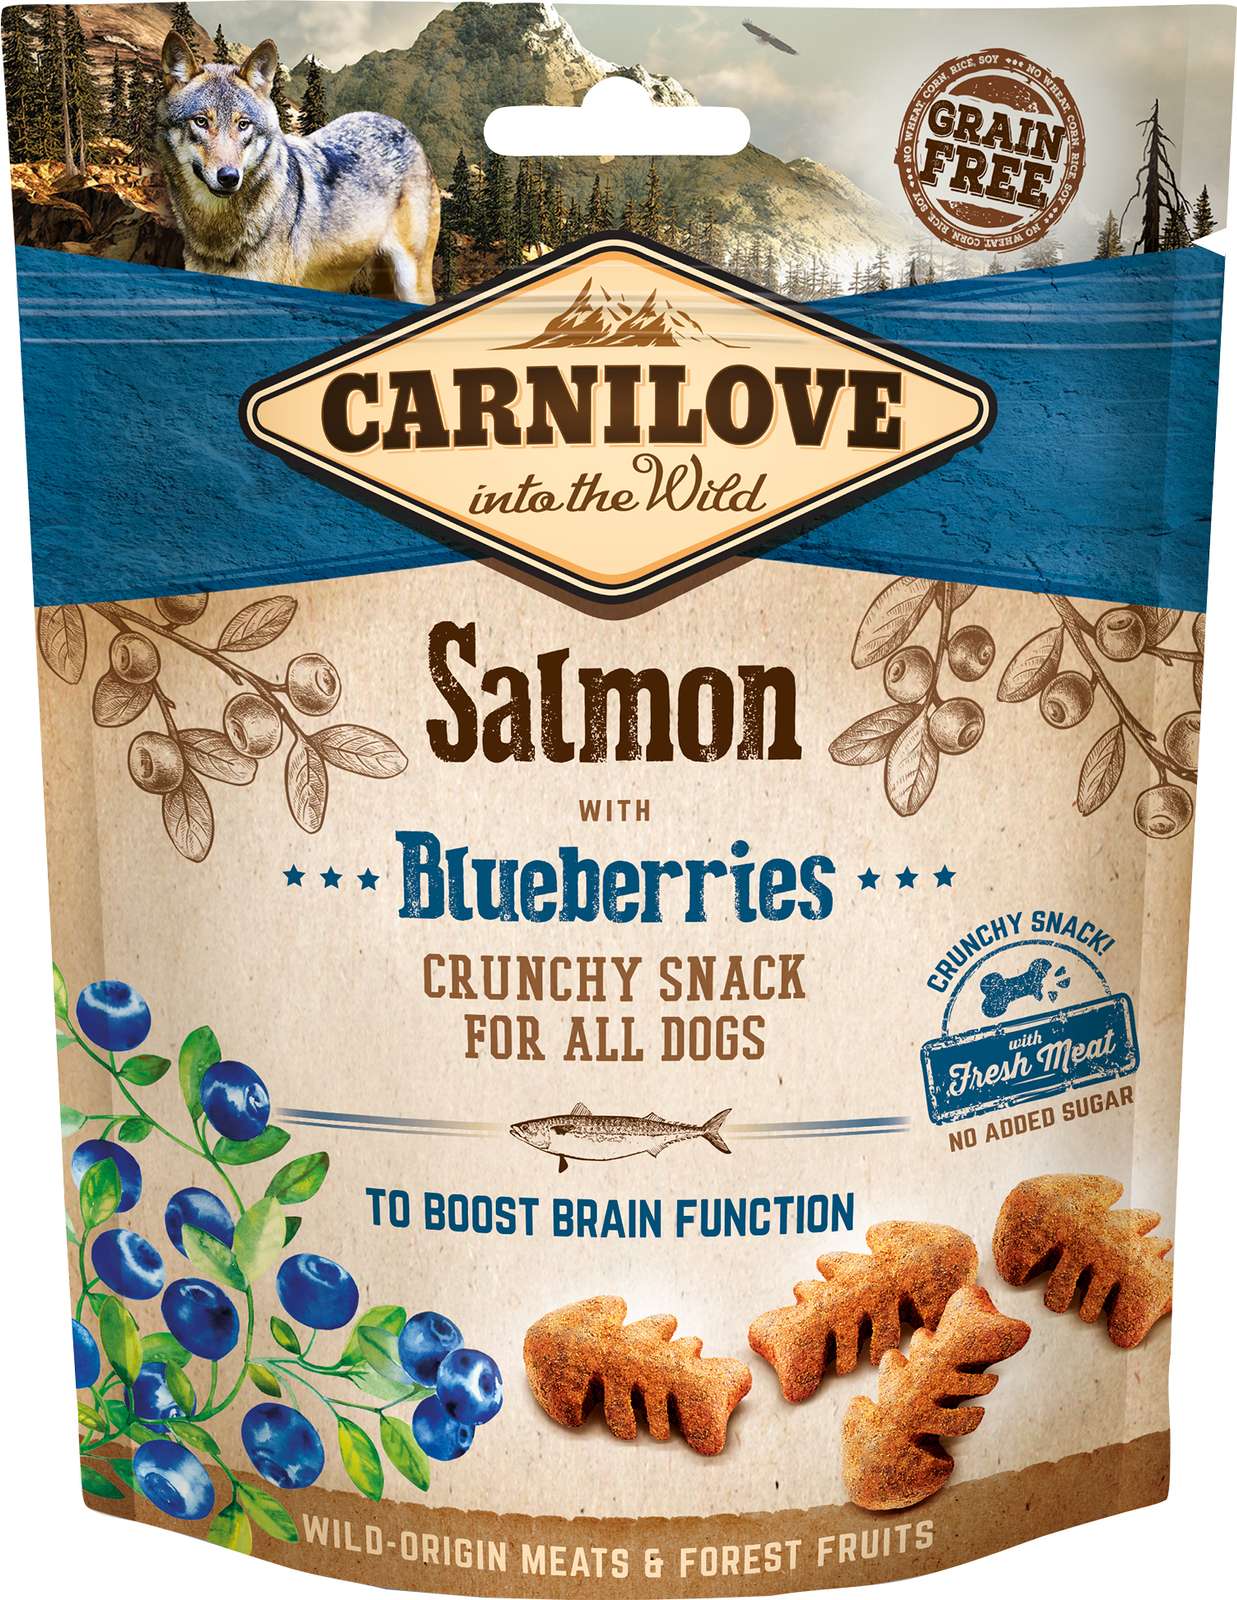 Crunchy snack Salmon & Blueberries